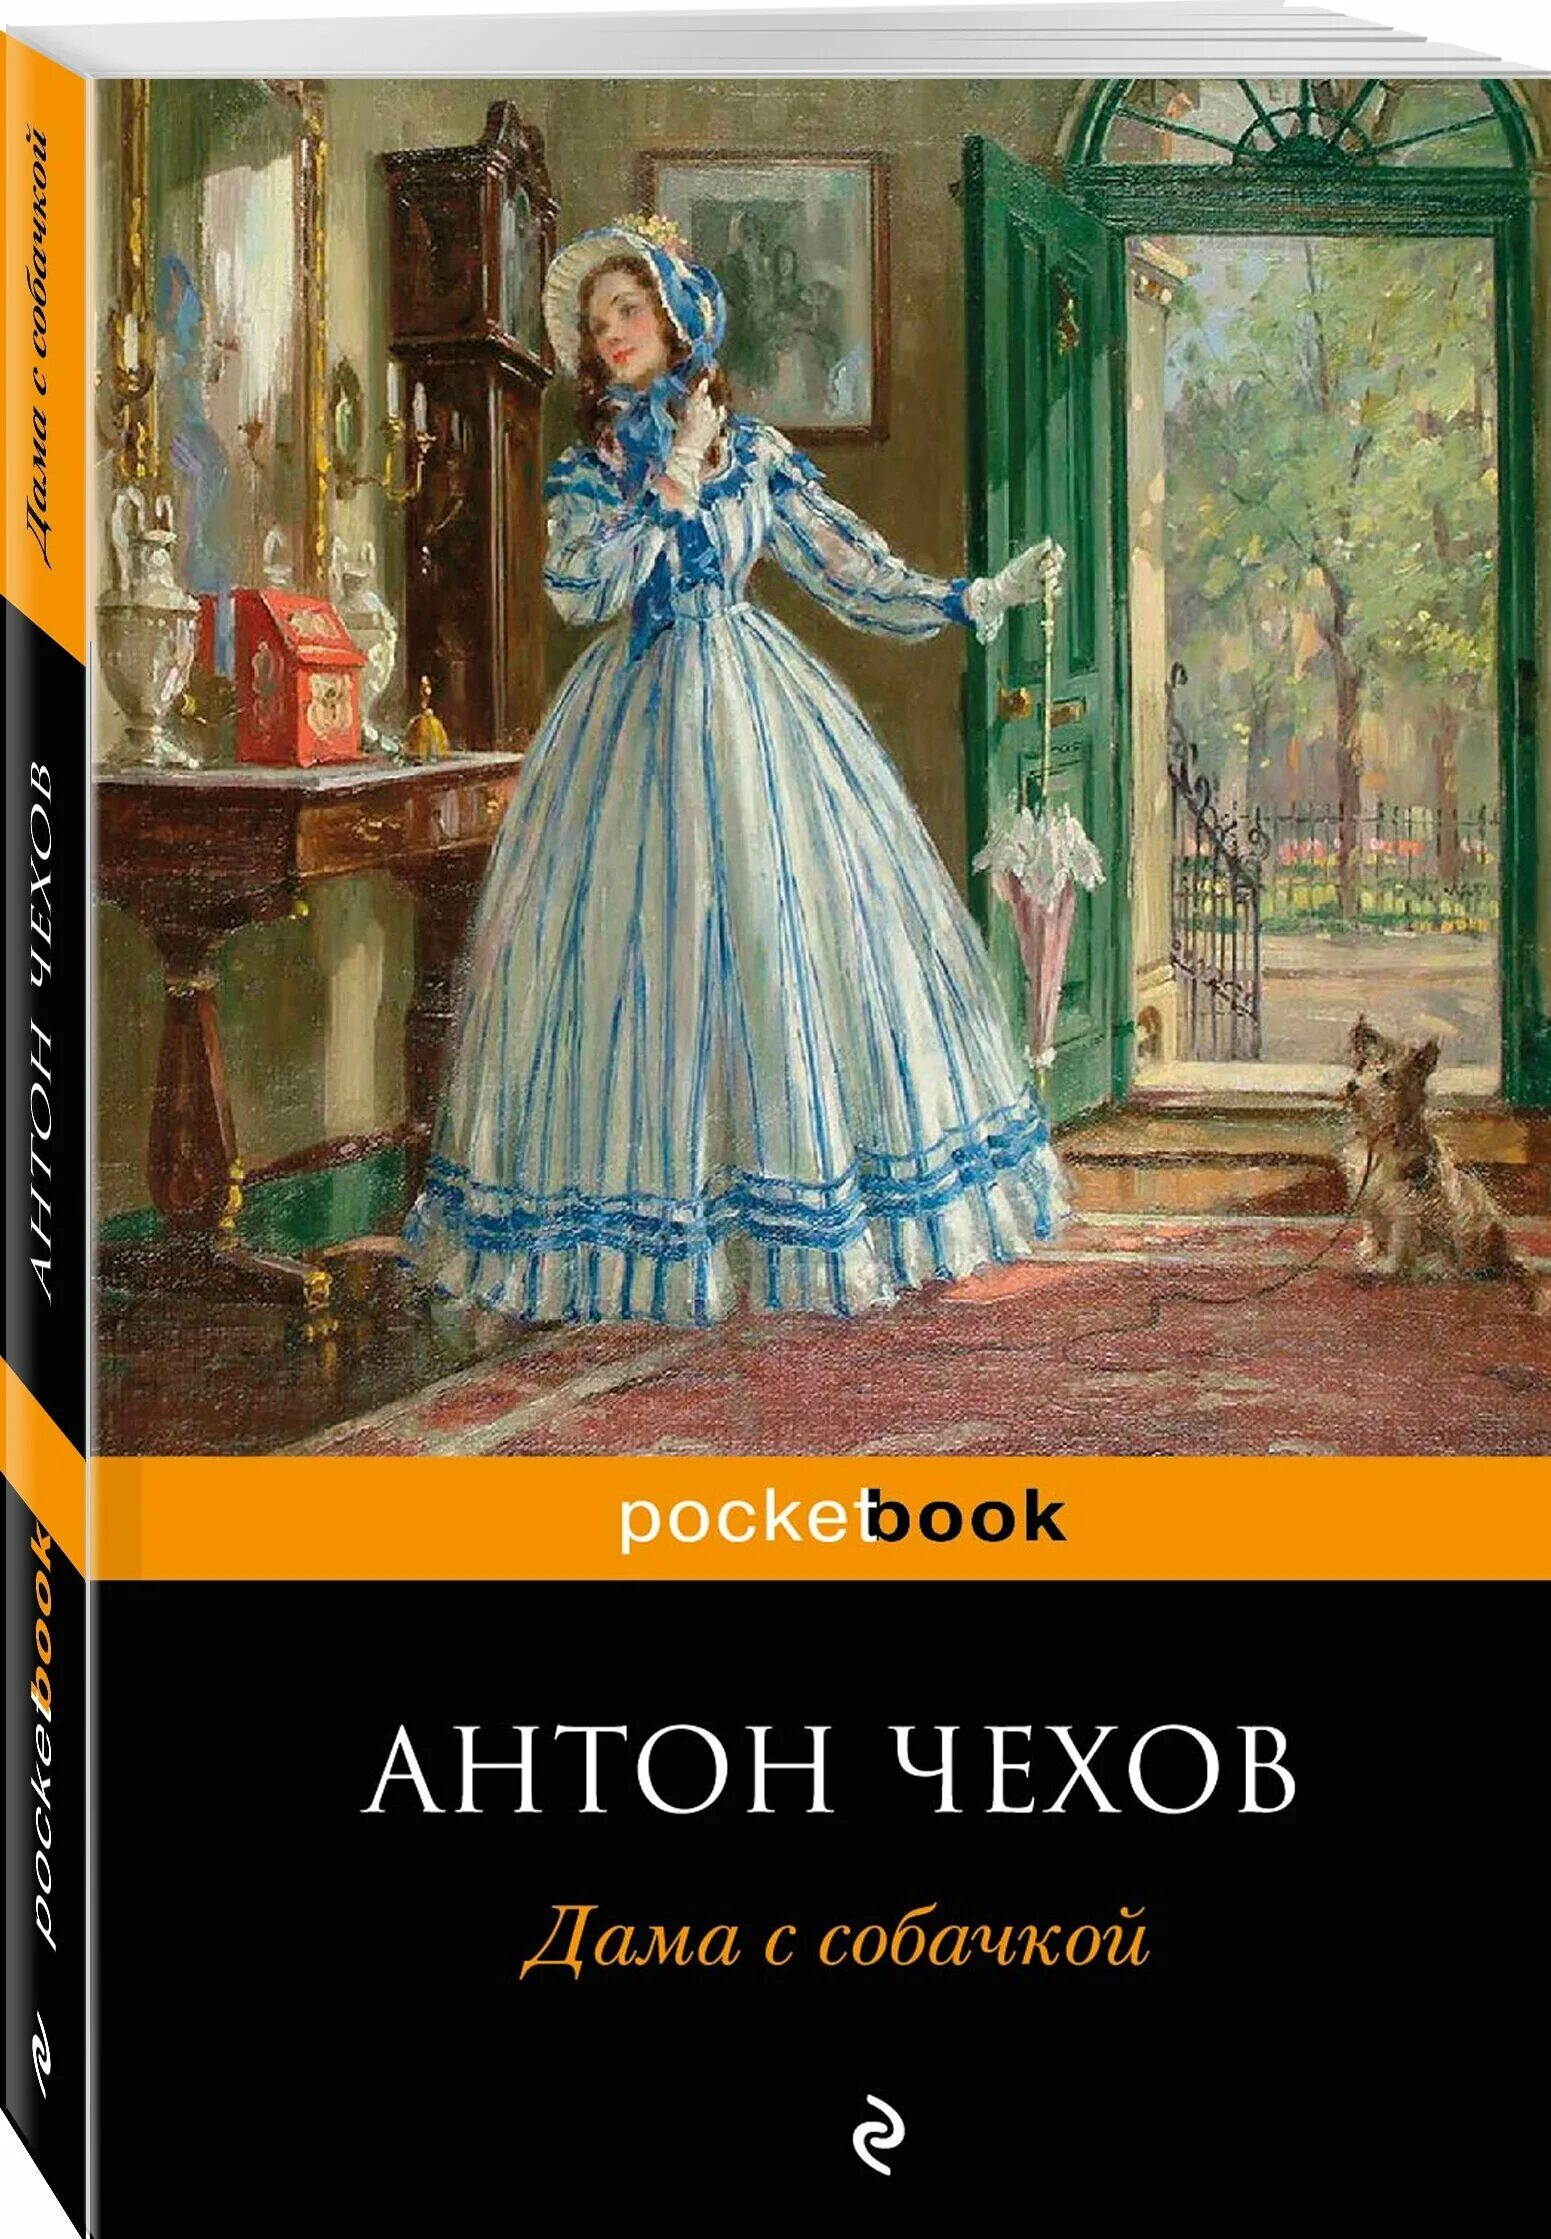 Чехов дама с собачкой обложка книги. А п чехов дама